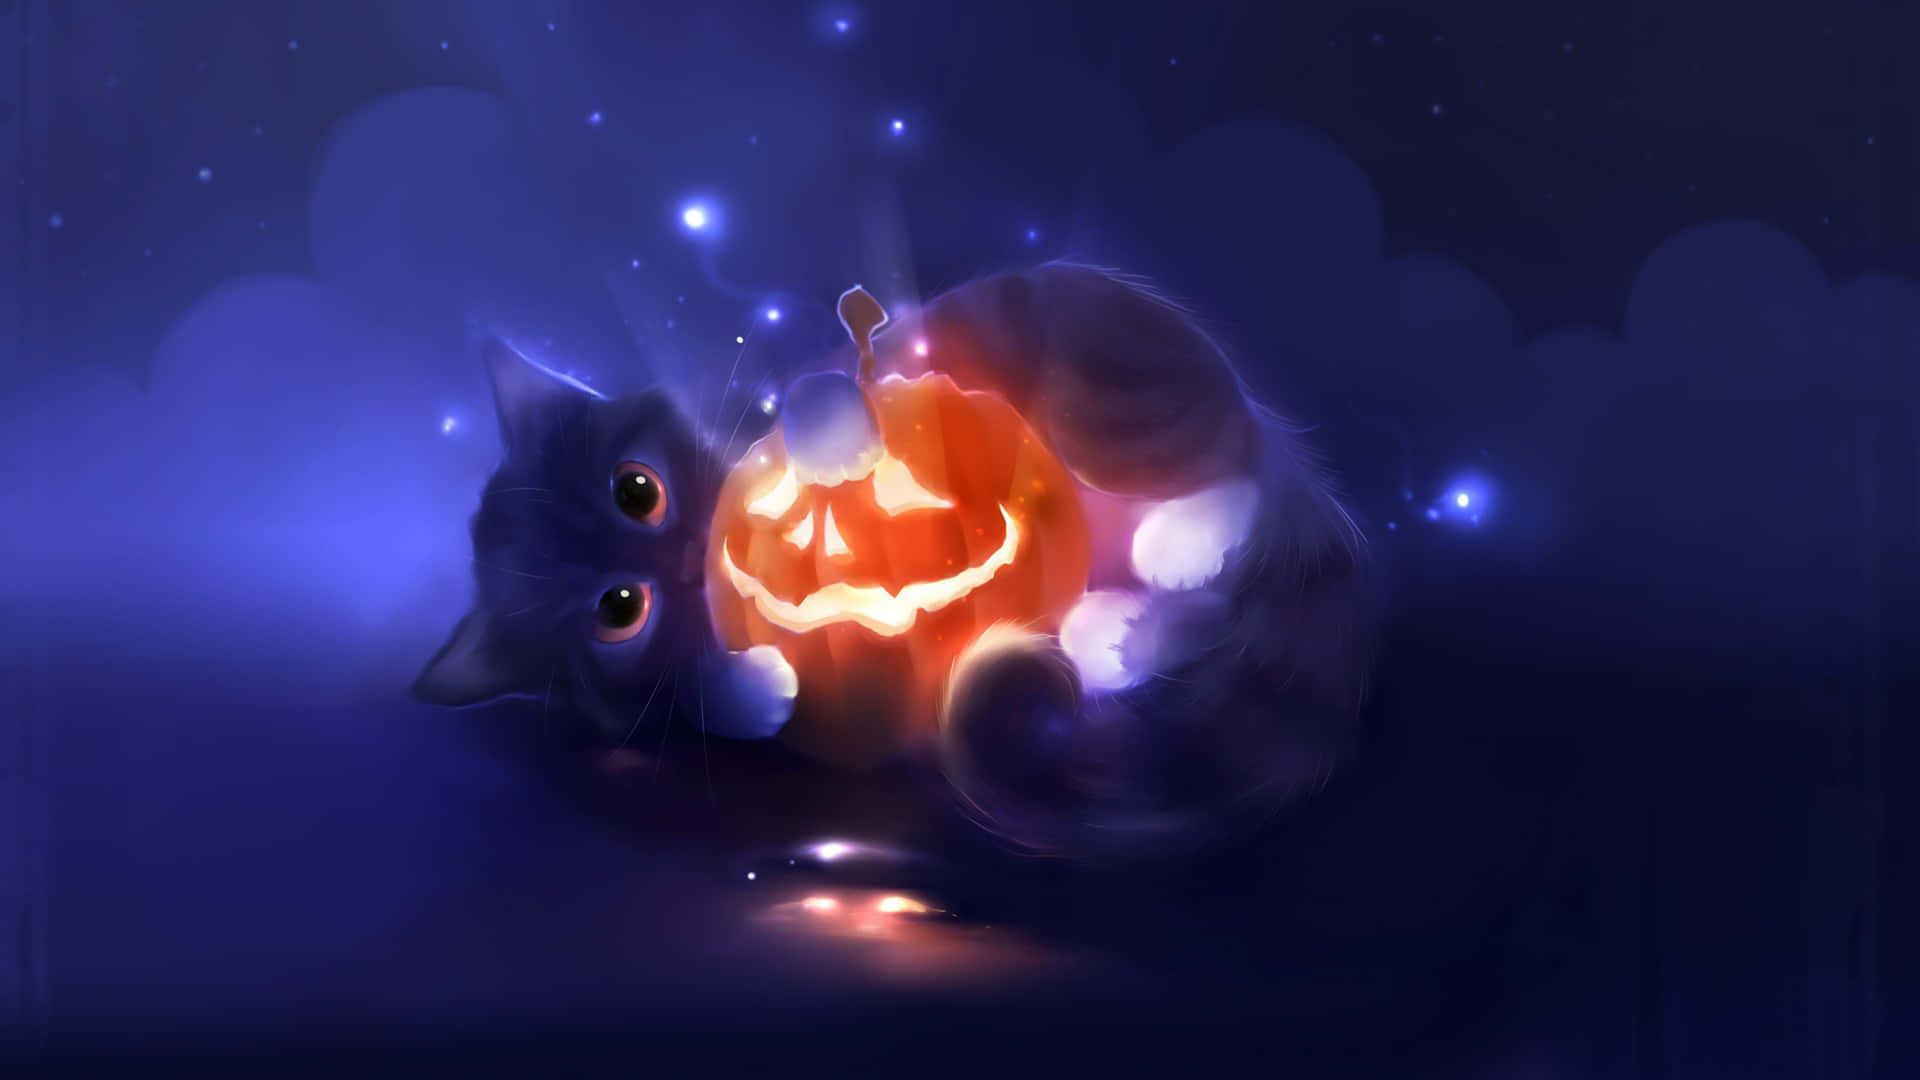 Spooky Halloween Cat with Glowing Eyes Wallpaper